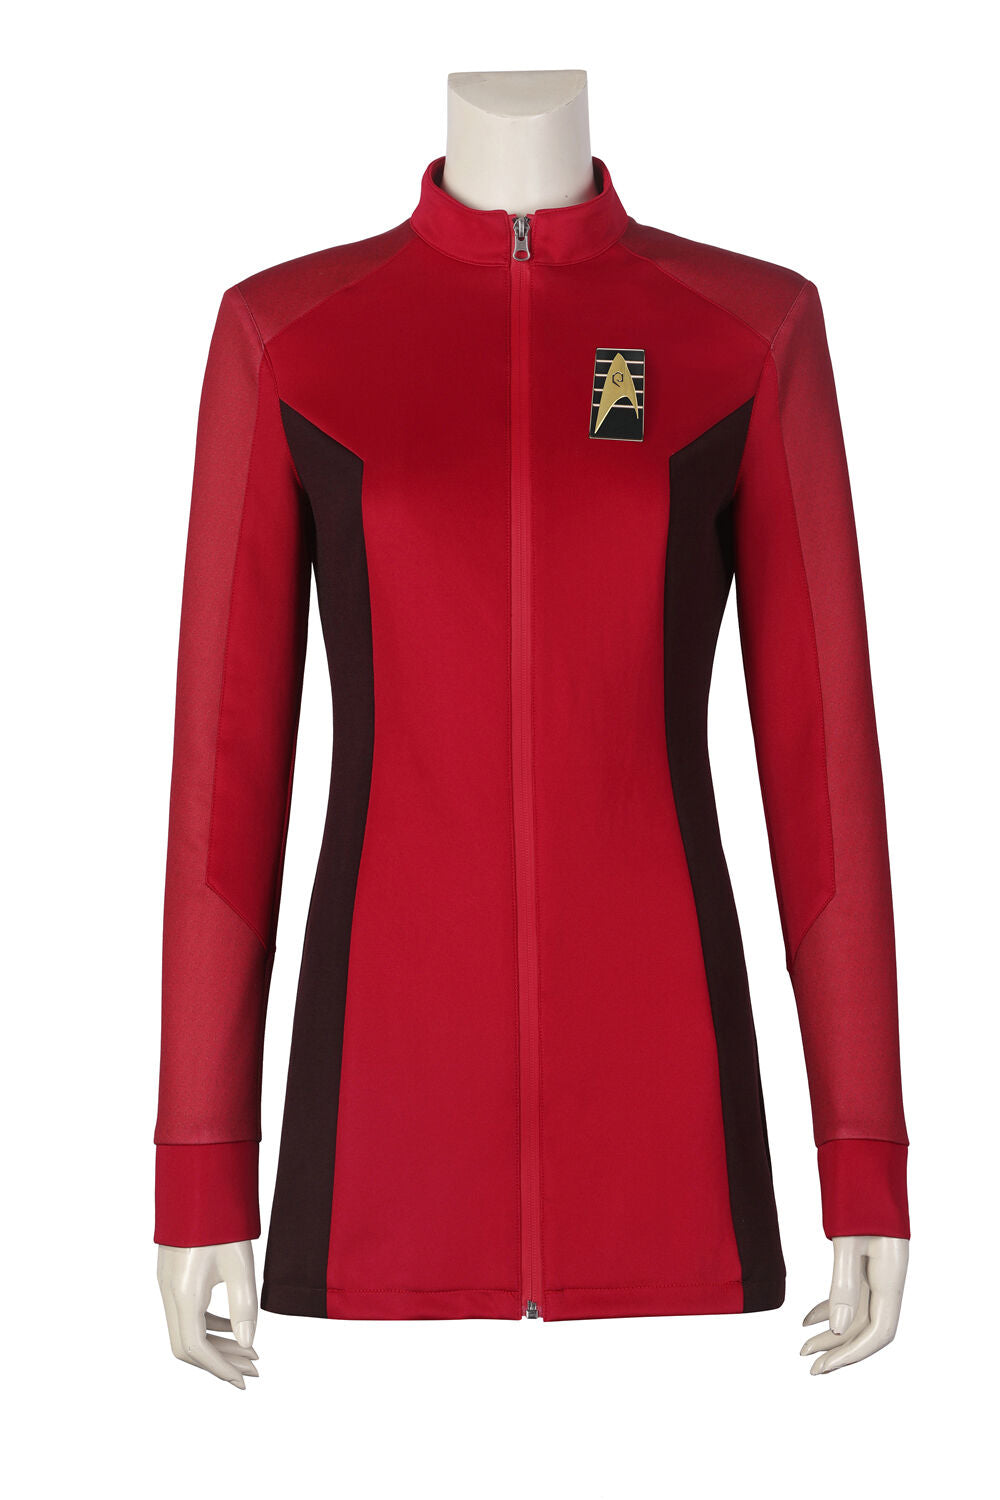 Star Trek Red Uniform Cosplay Costume High Quality